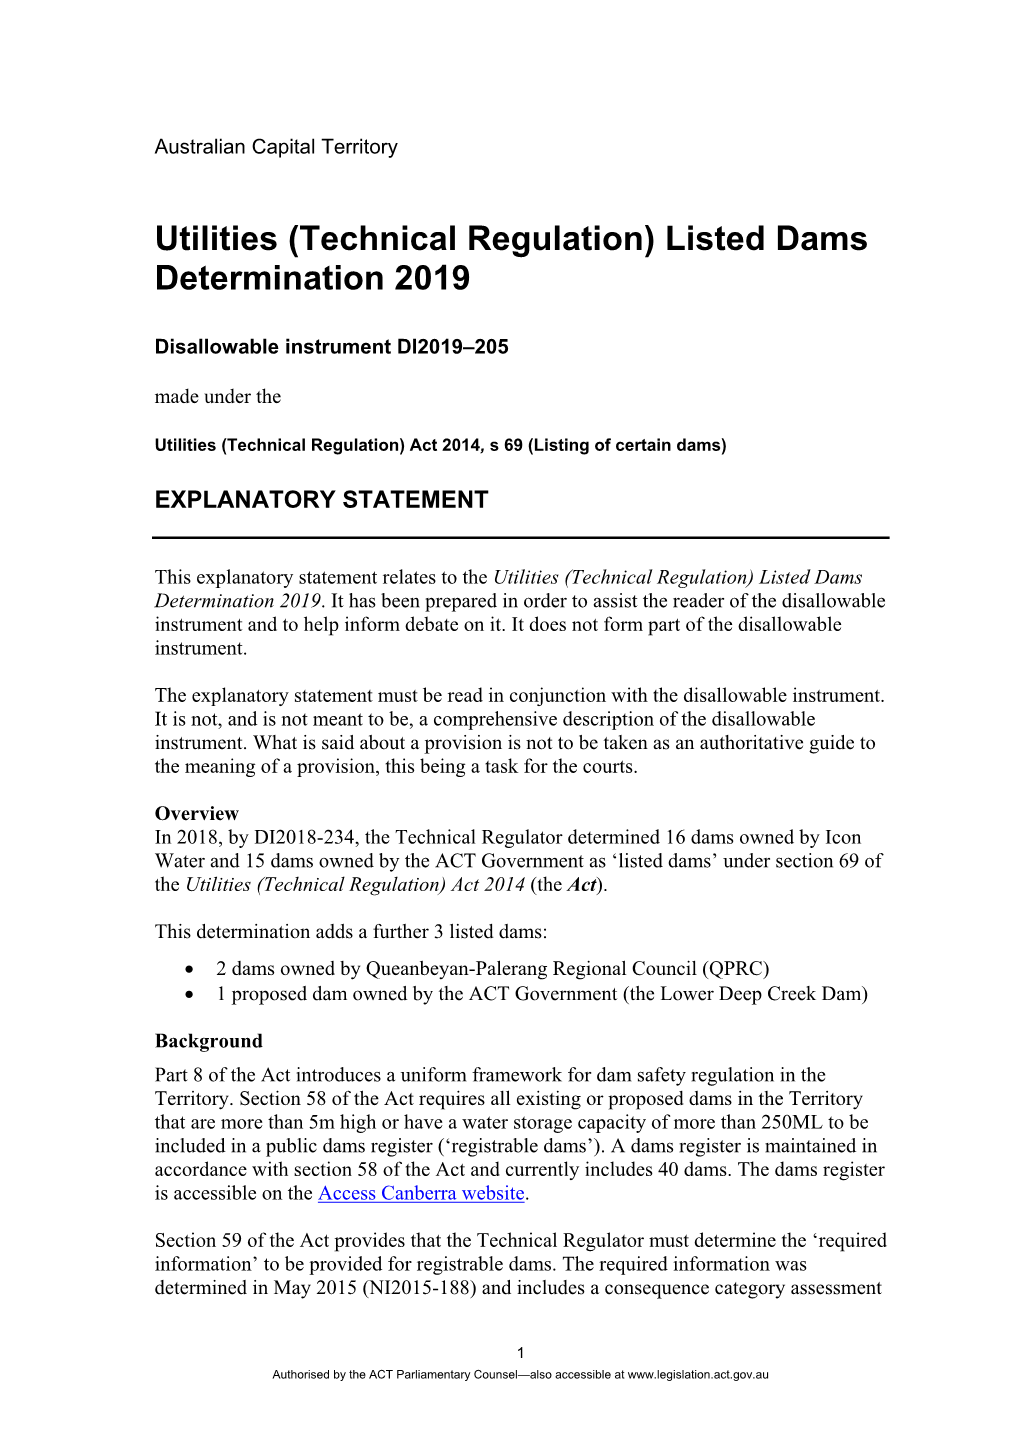 Utilities (Technical Regulation) Listed Dams Determination 2019